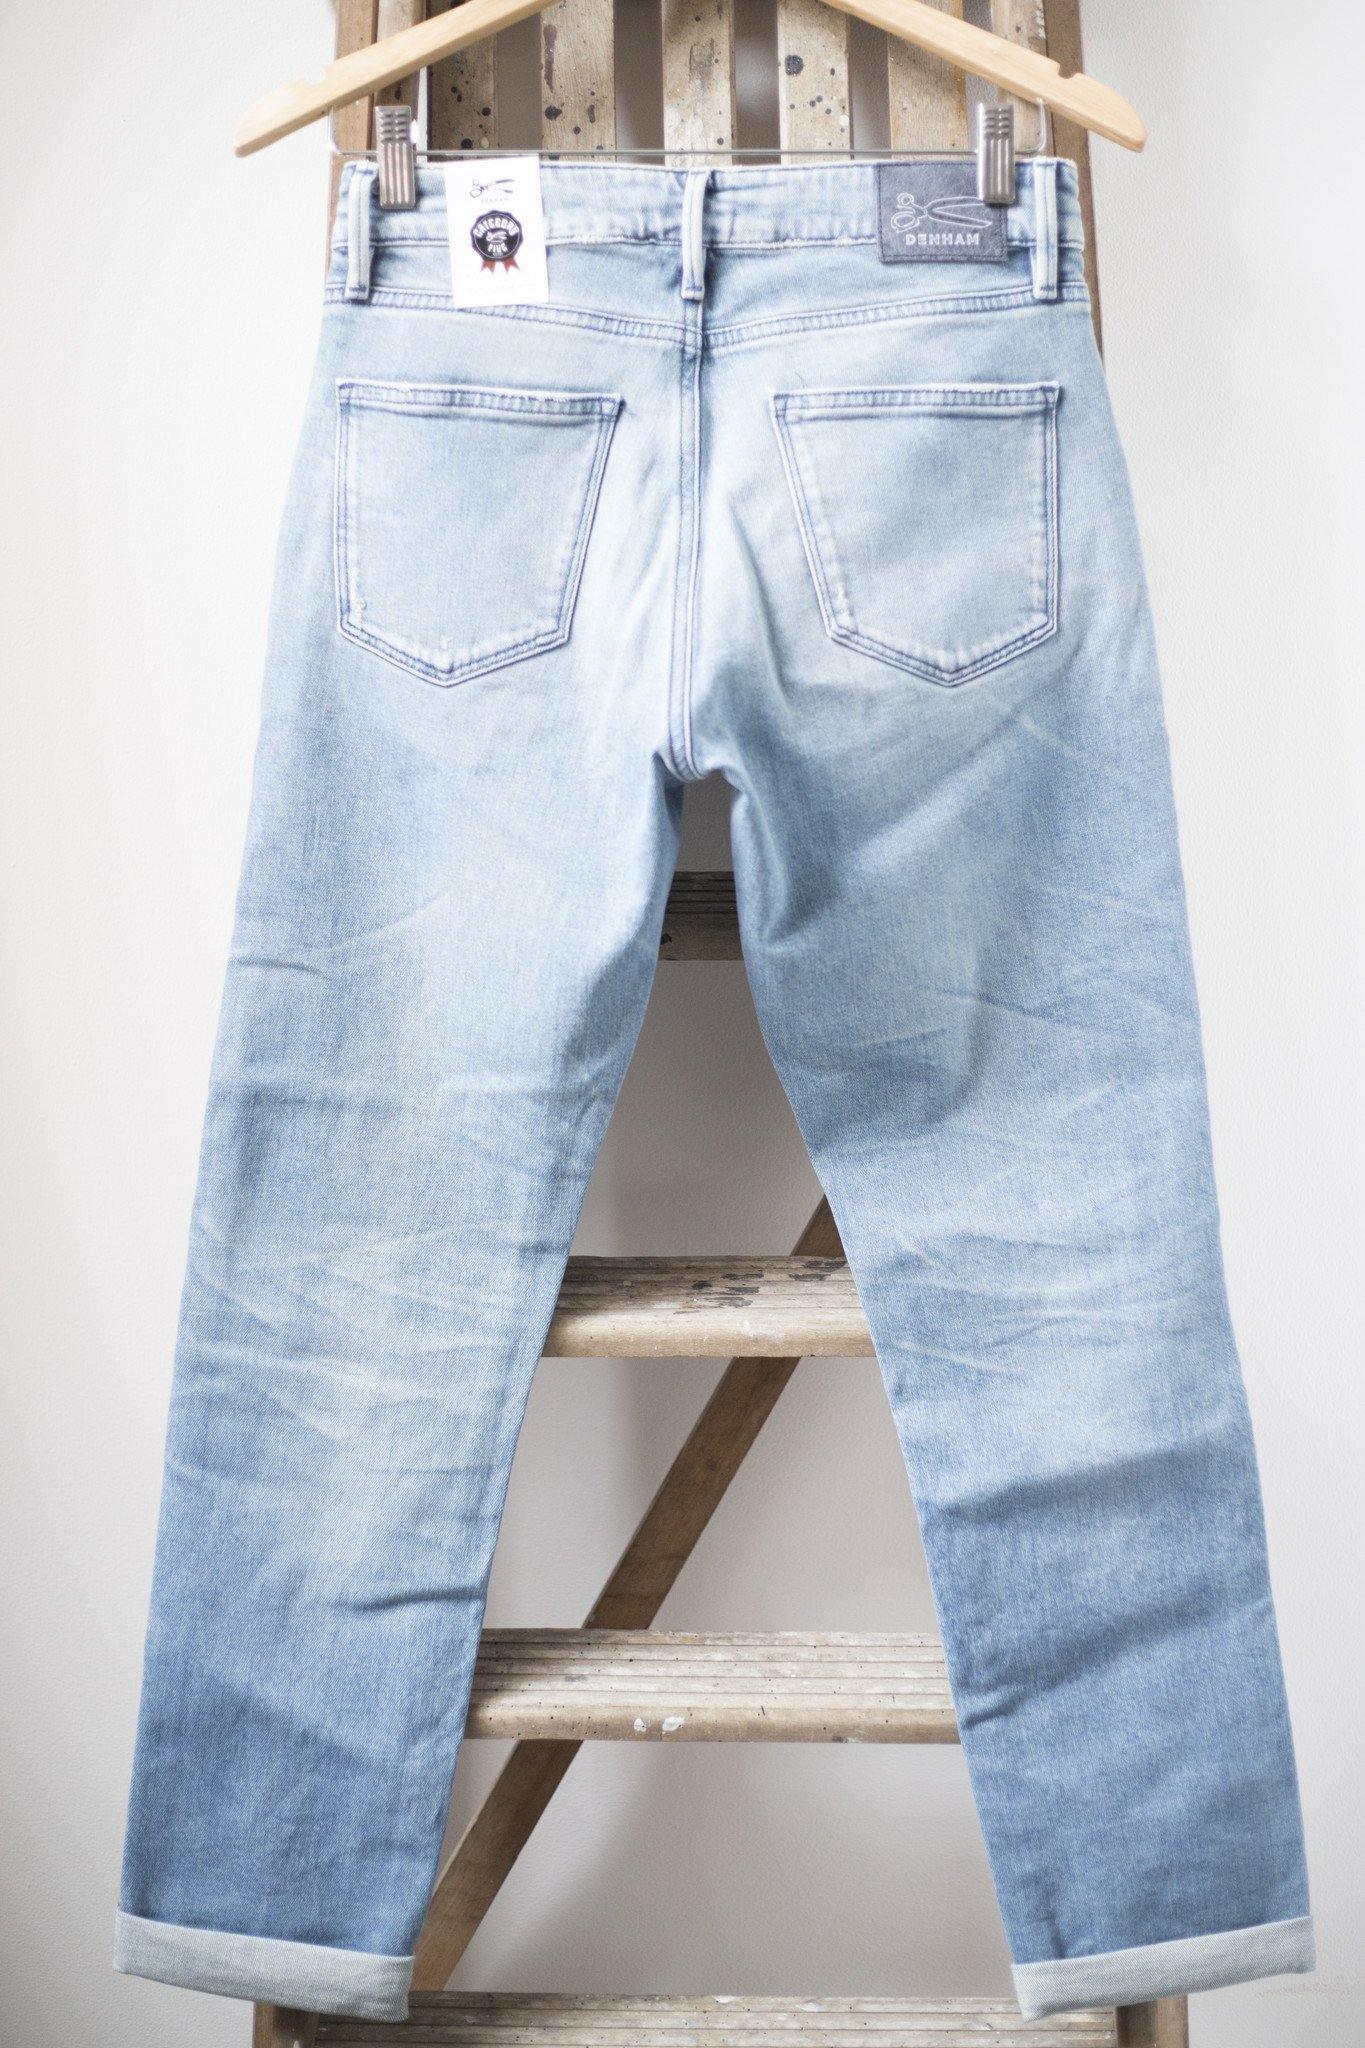 Denham The Jeanmaker - Monroe Golden Rivet Blue City Patch Jeans - 32 The Guild 